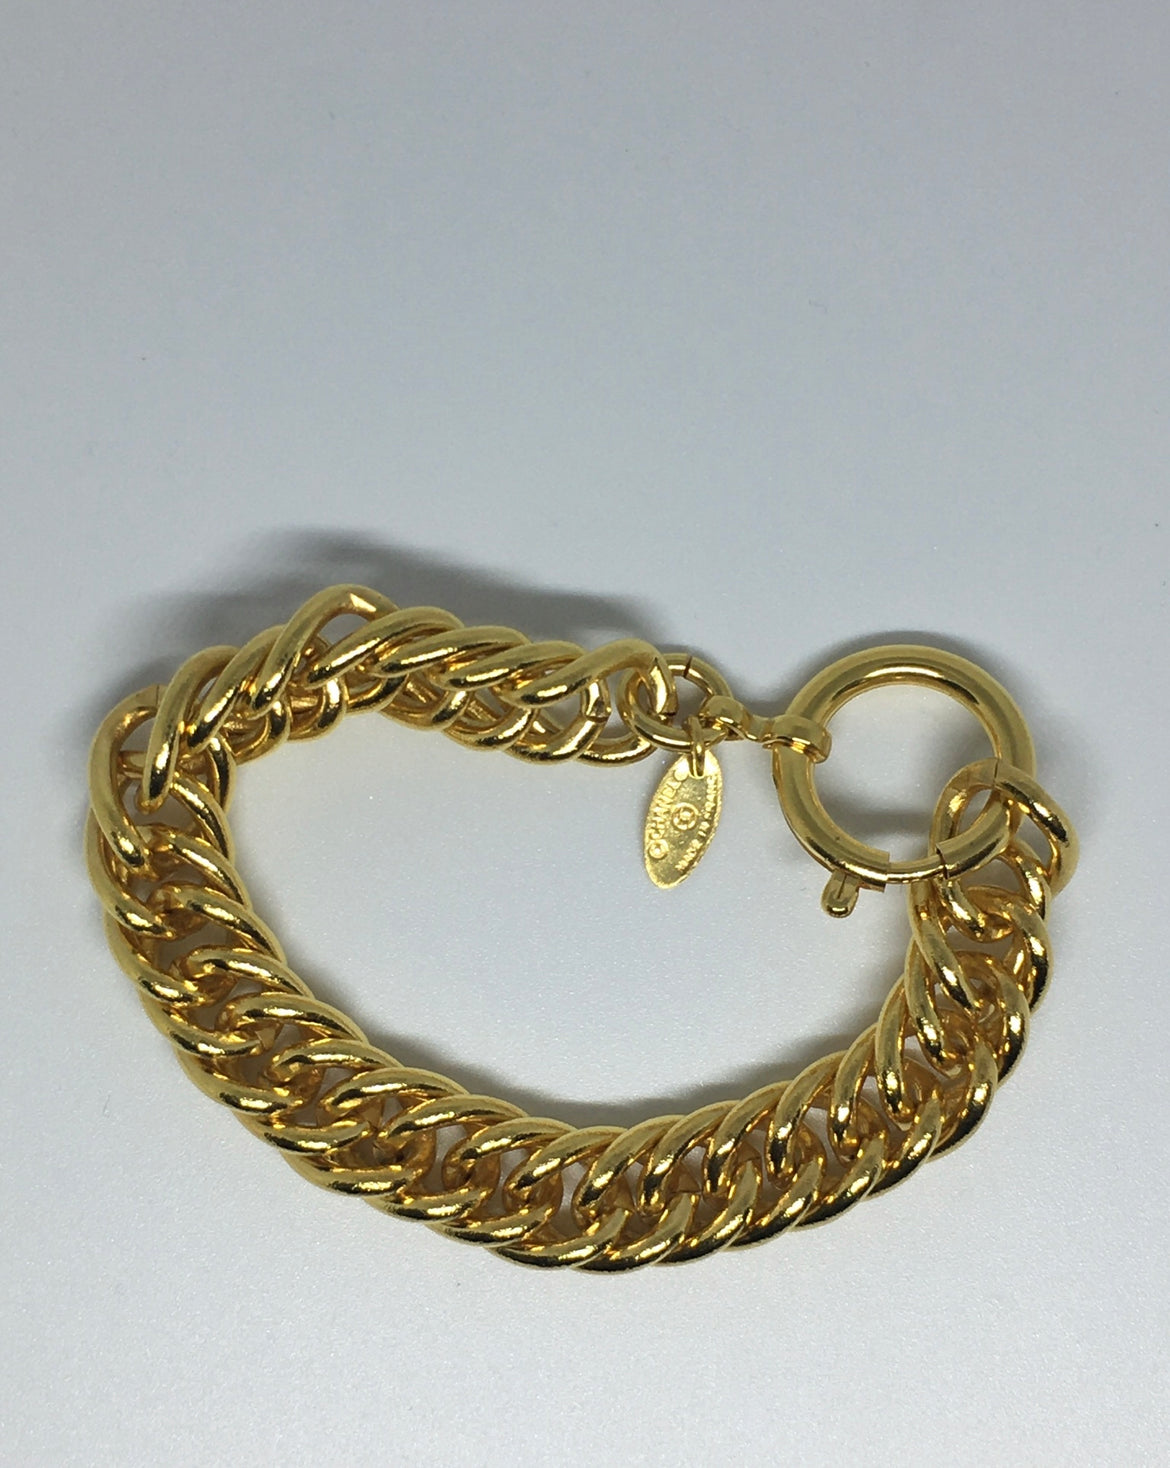 100% Authentic Vintage Repurposed Chanel Chain Bracelet